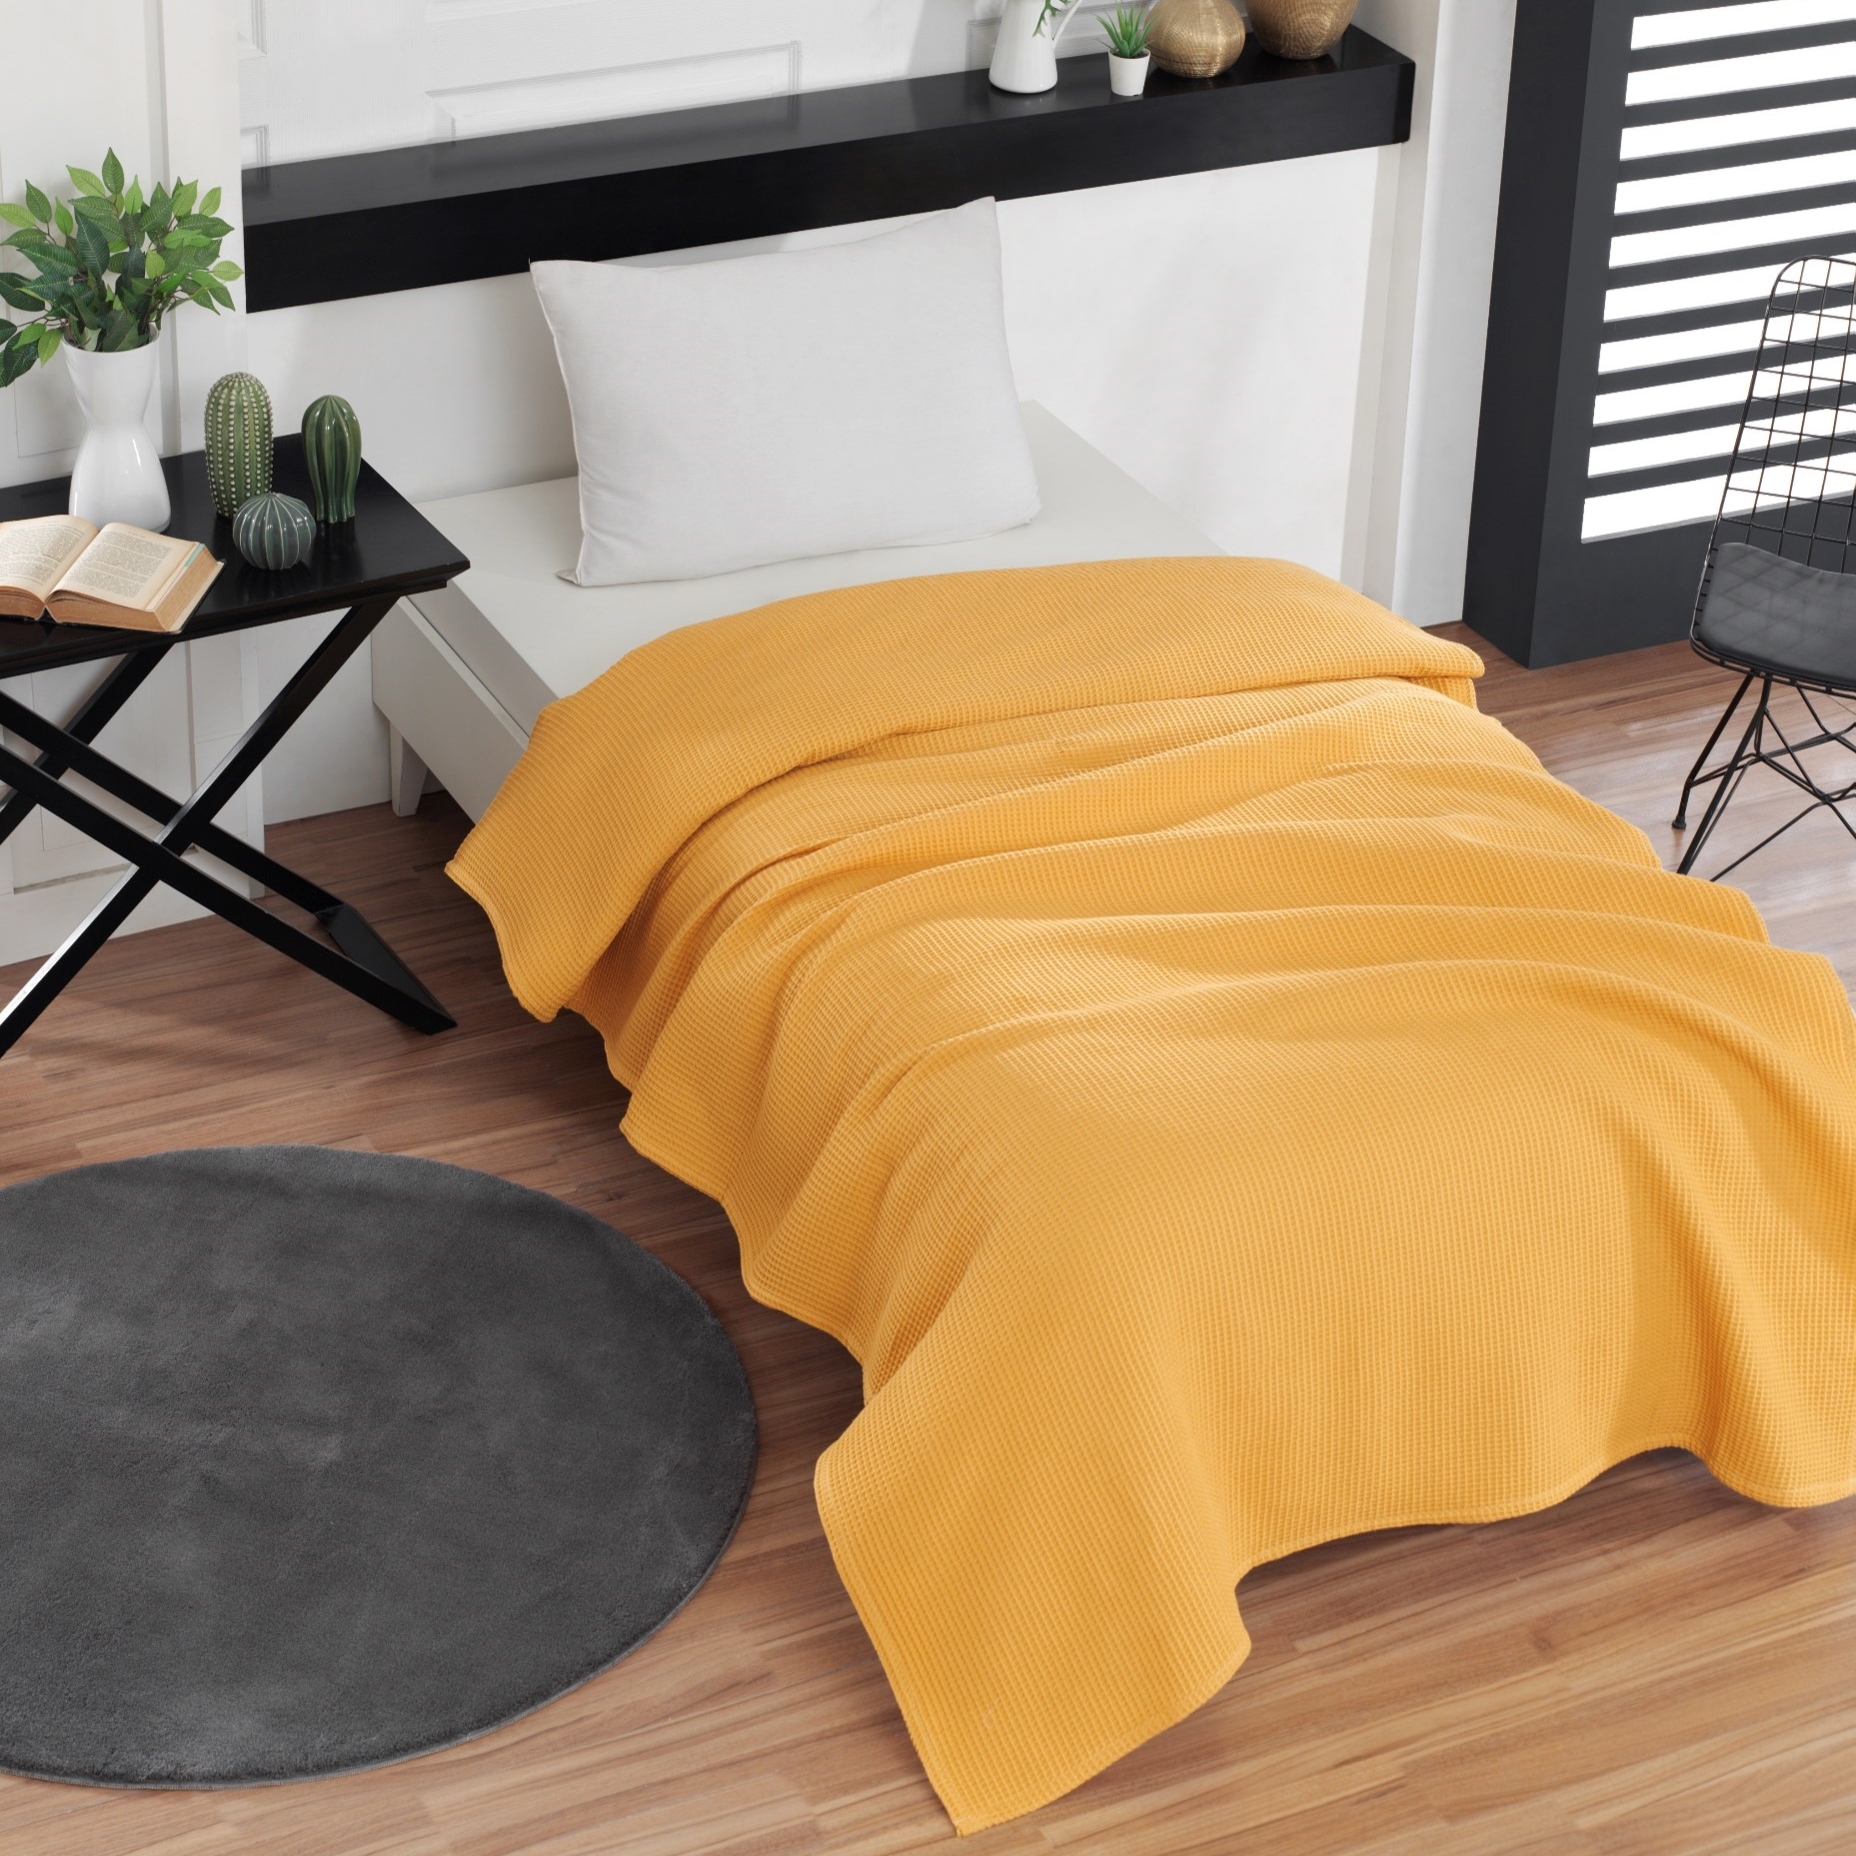 Enkel smukt gult sengetæppe fra